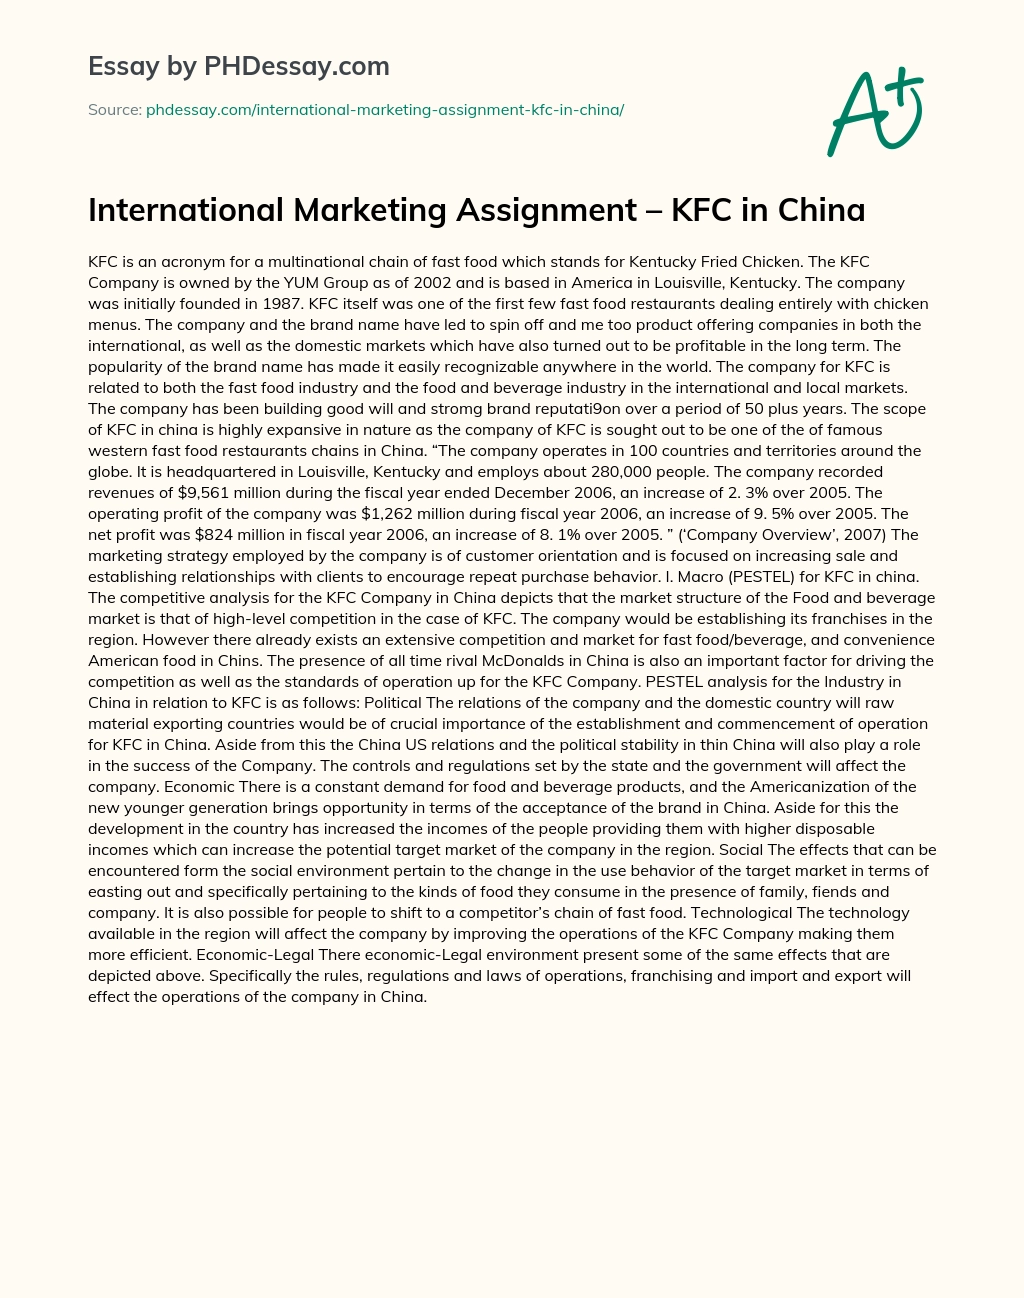 International Marketing Assignment – KFC in China essay